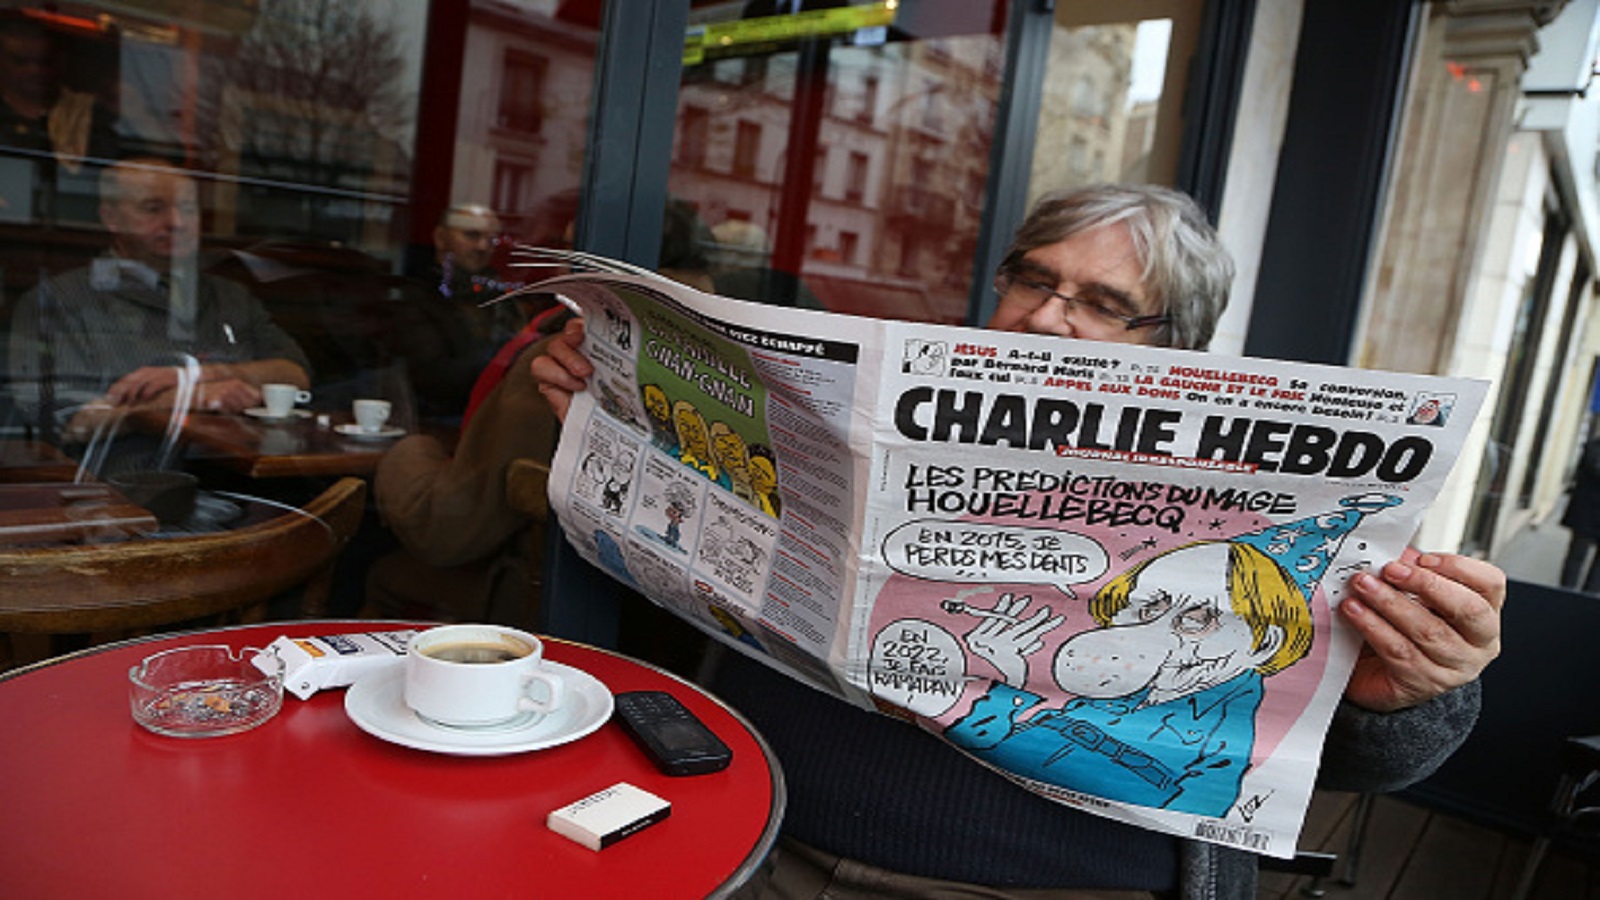 فرنسا: محاكمة 14 شخصاً مرتبطين باعتداءات "شارلي إيبدو"